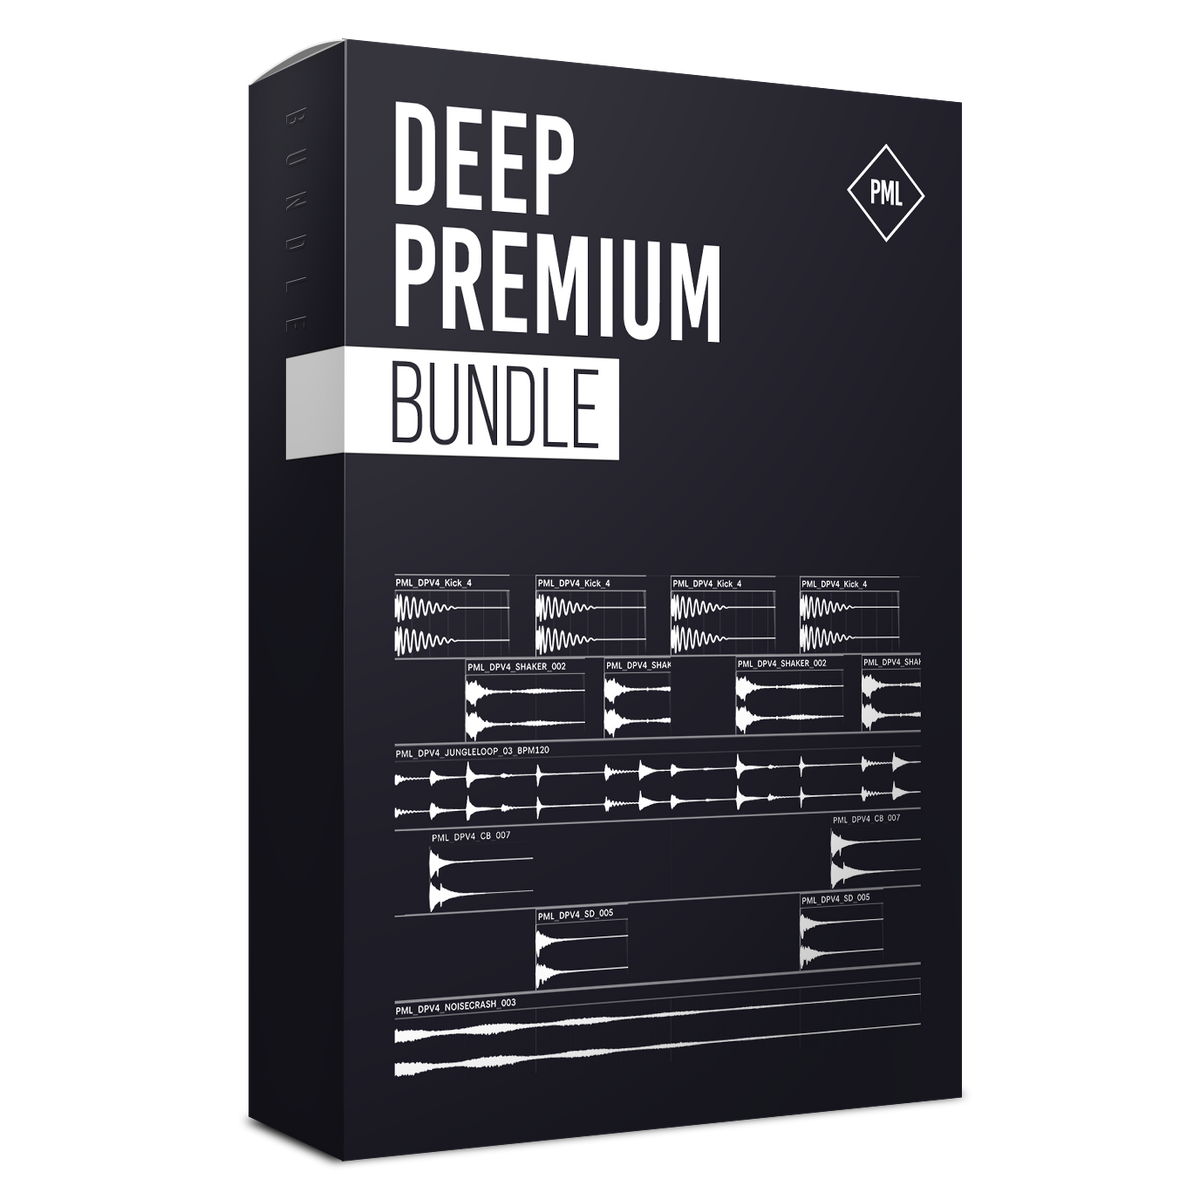 Deep Premium Drum Pack Bundle Product Box